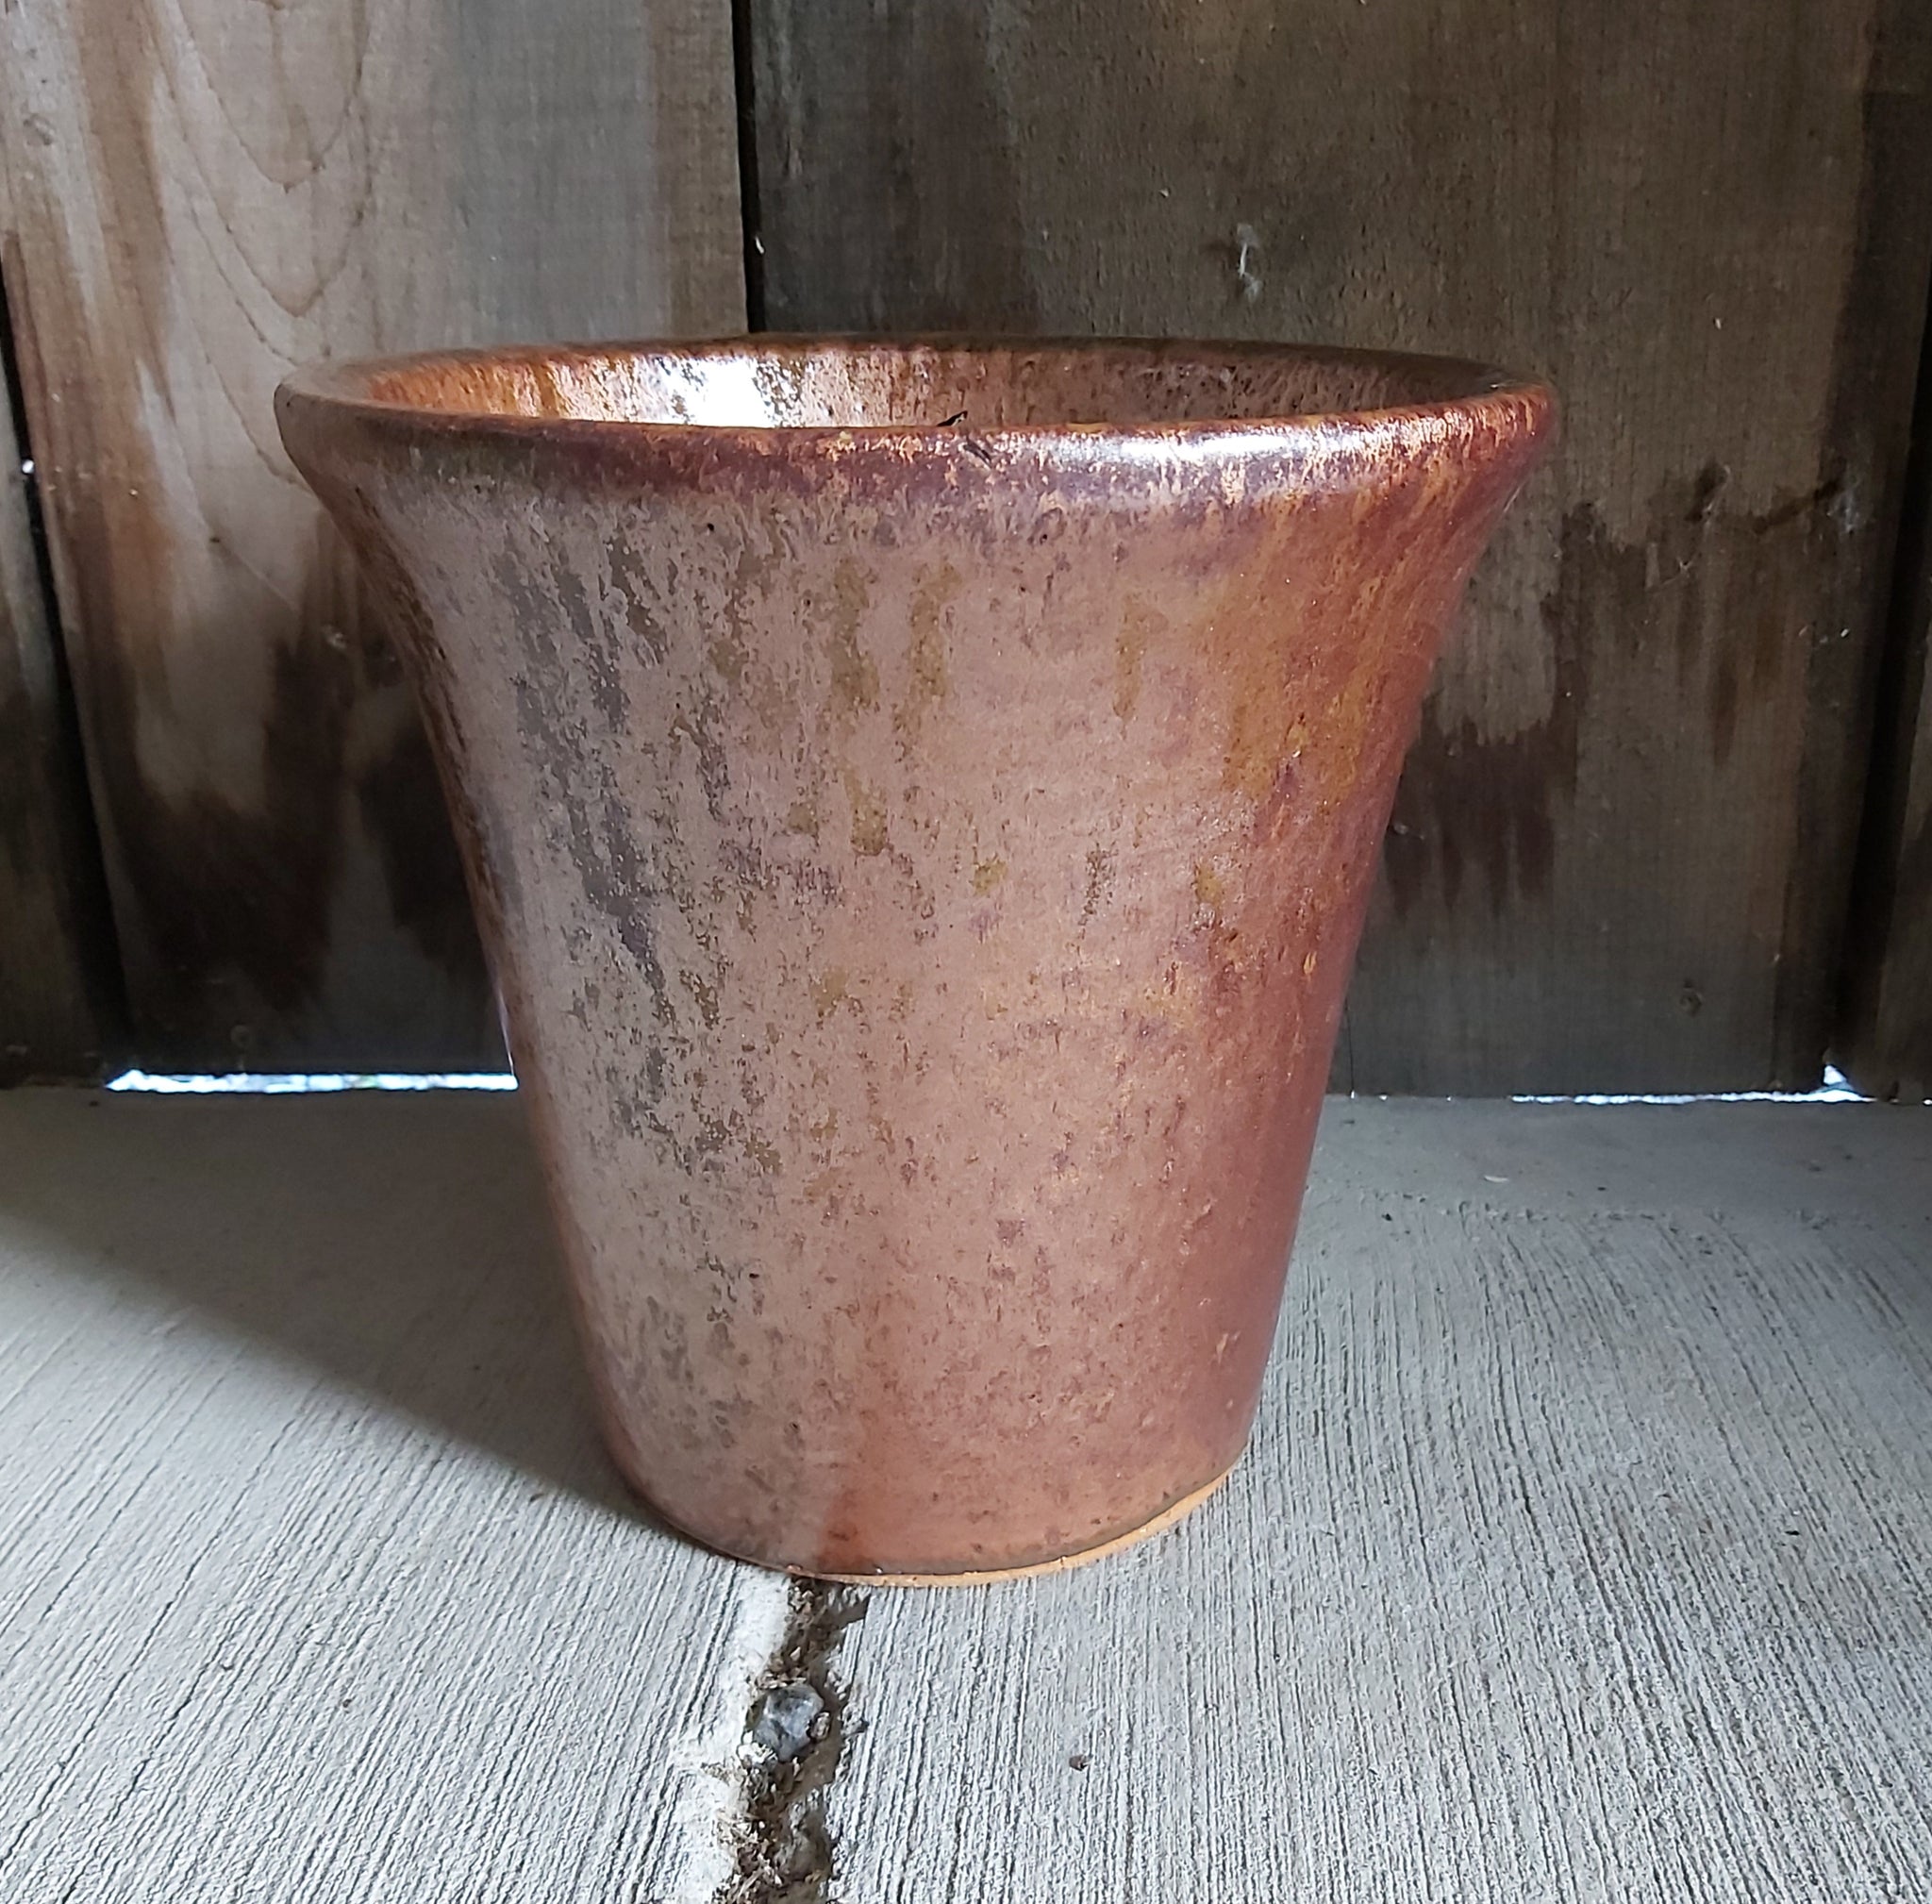 Glazed Ceramic Planter - Cayenne